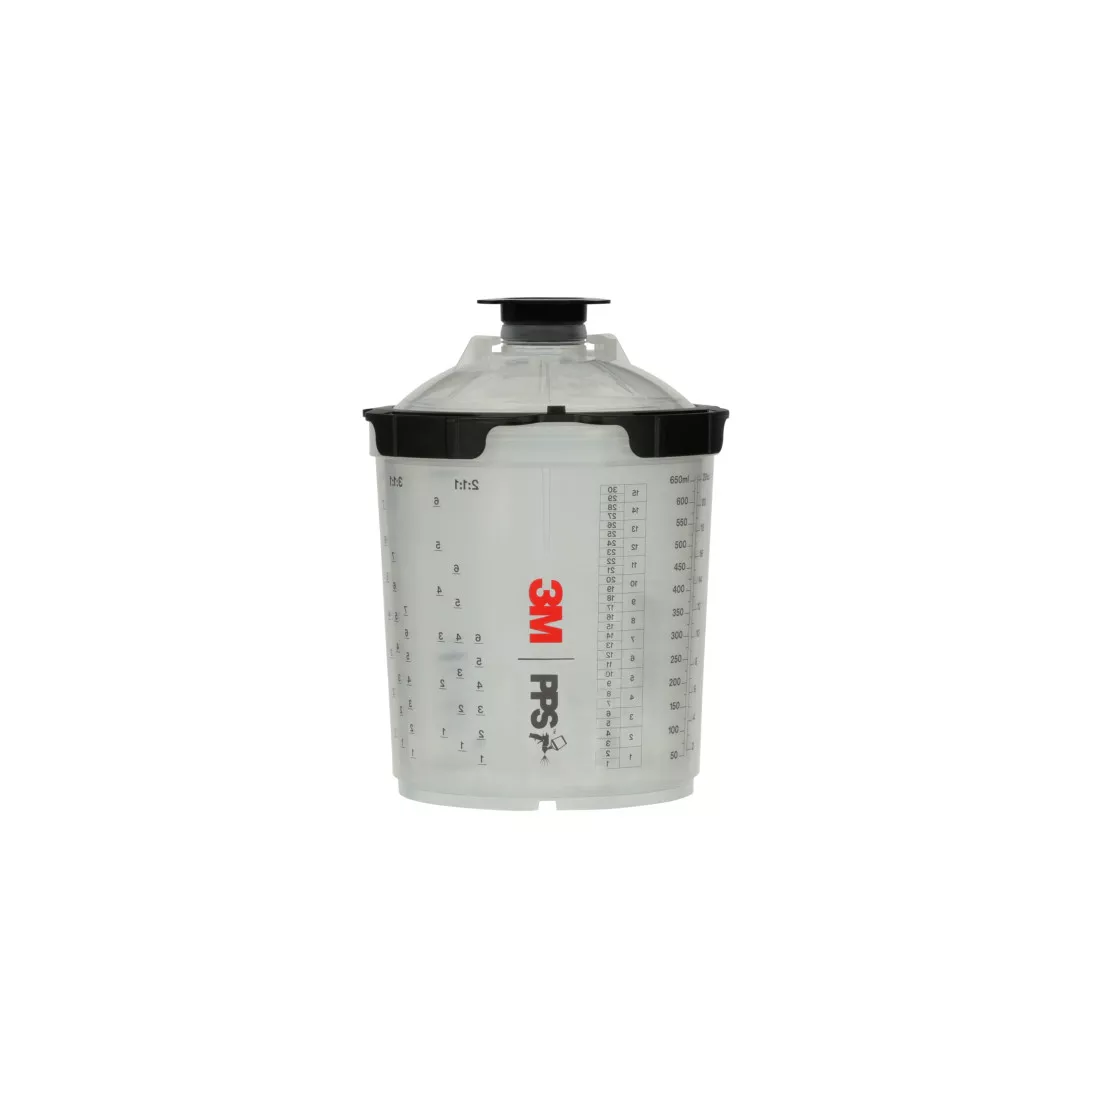 3M™ PPS™ Series 2.0 Spray Cup System Kit, 26000, Standard (22 fl oz, 650
mL), 200 Micron Filter, 1 kit per case